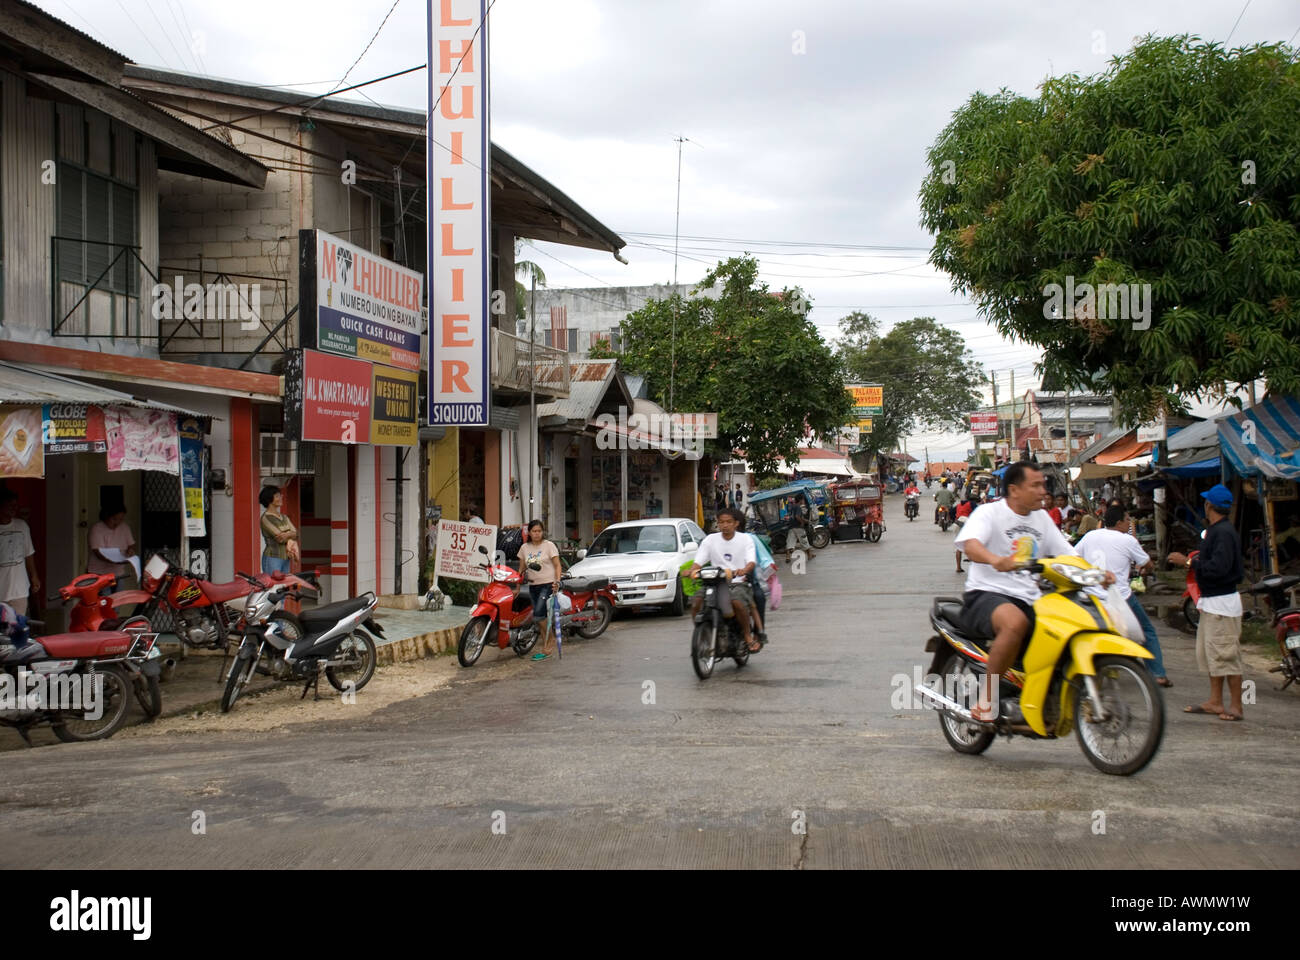 philippines siquijor island siquijor town street scene Stock Photo